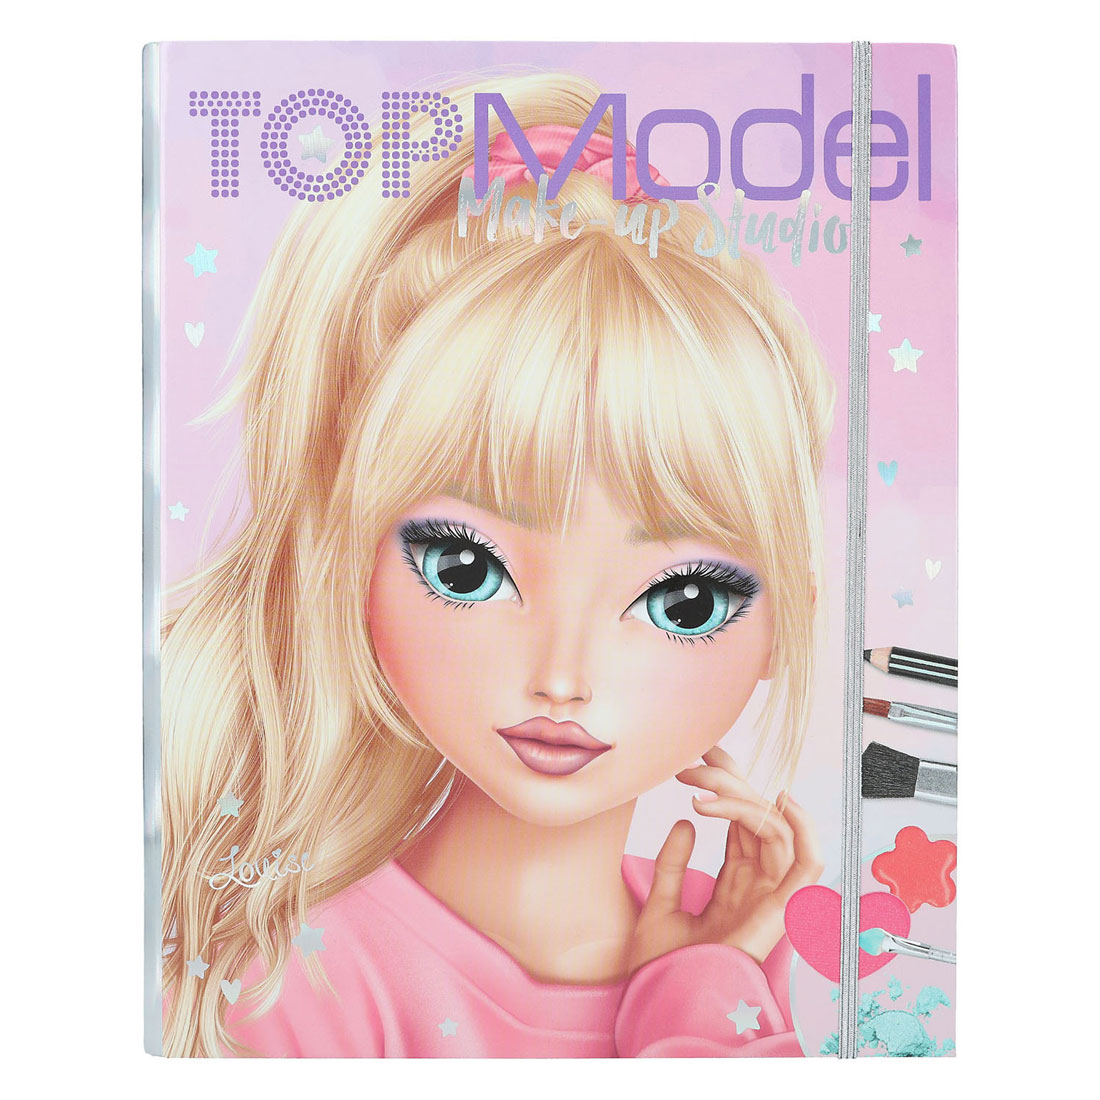 Dossier de guide de maquillage TOPMODEL